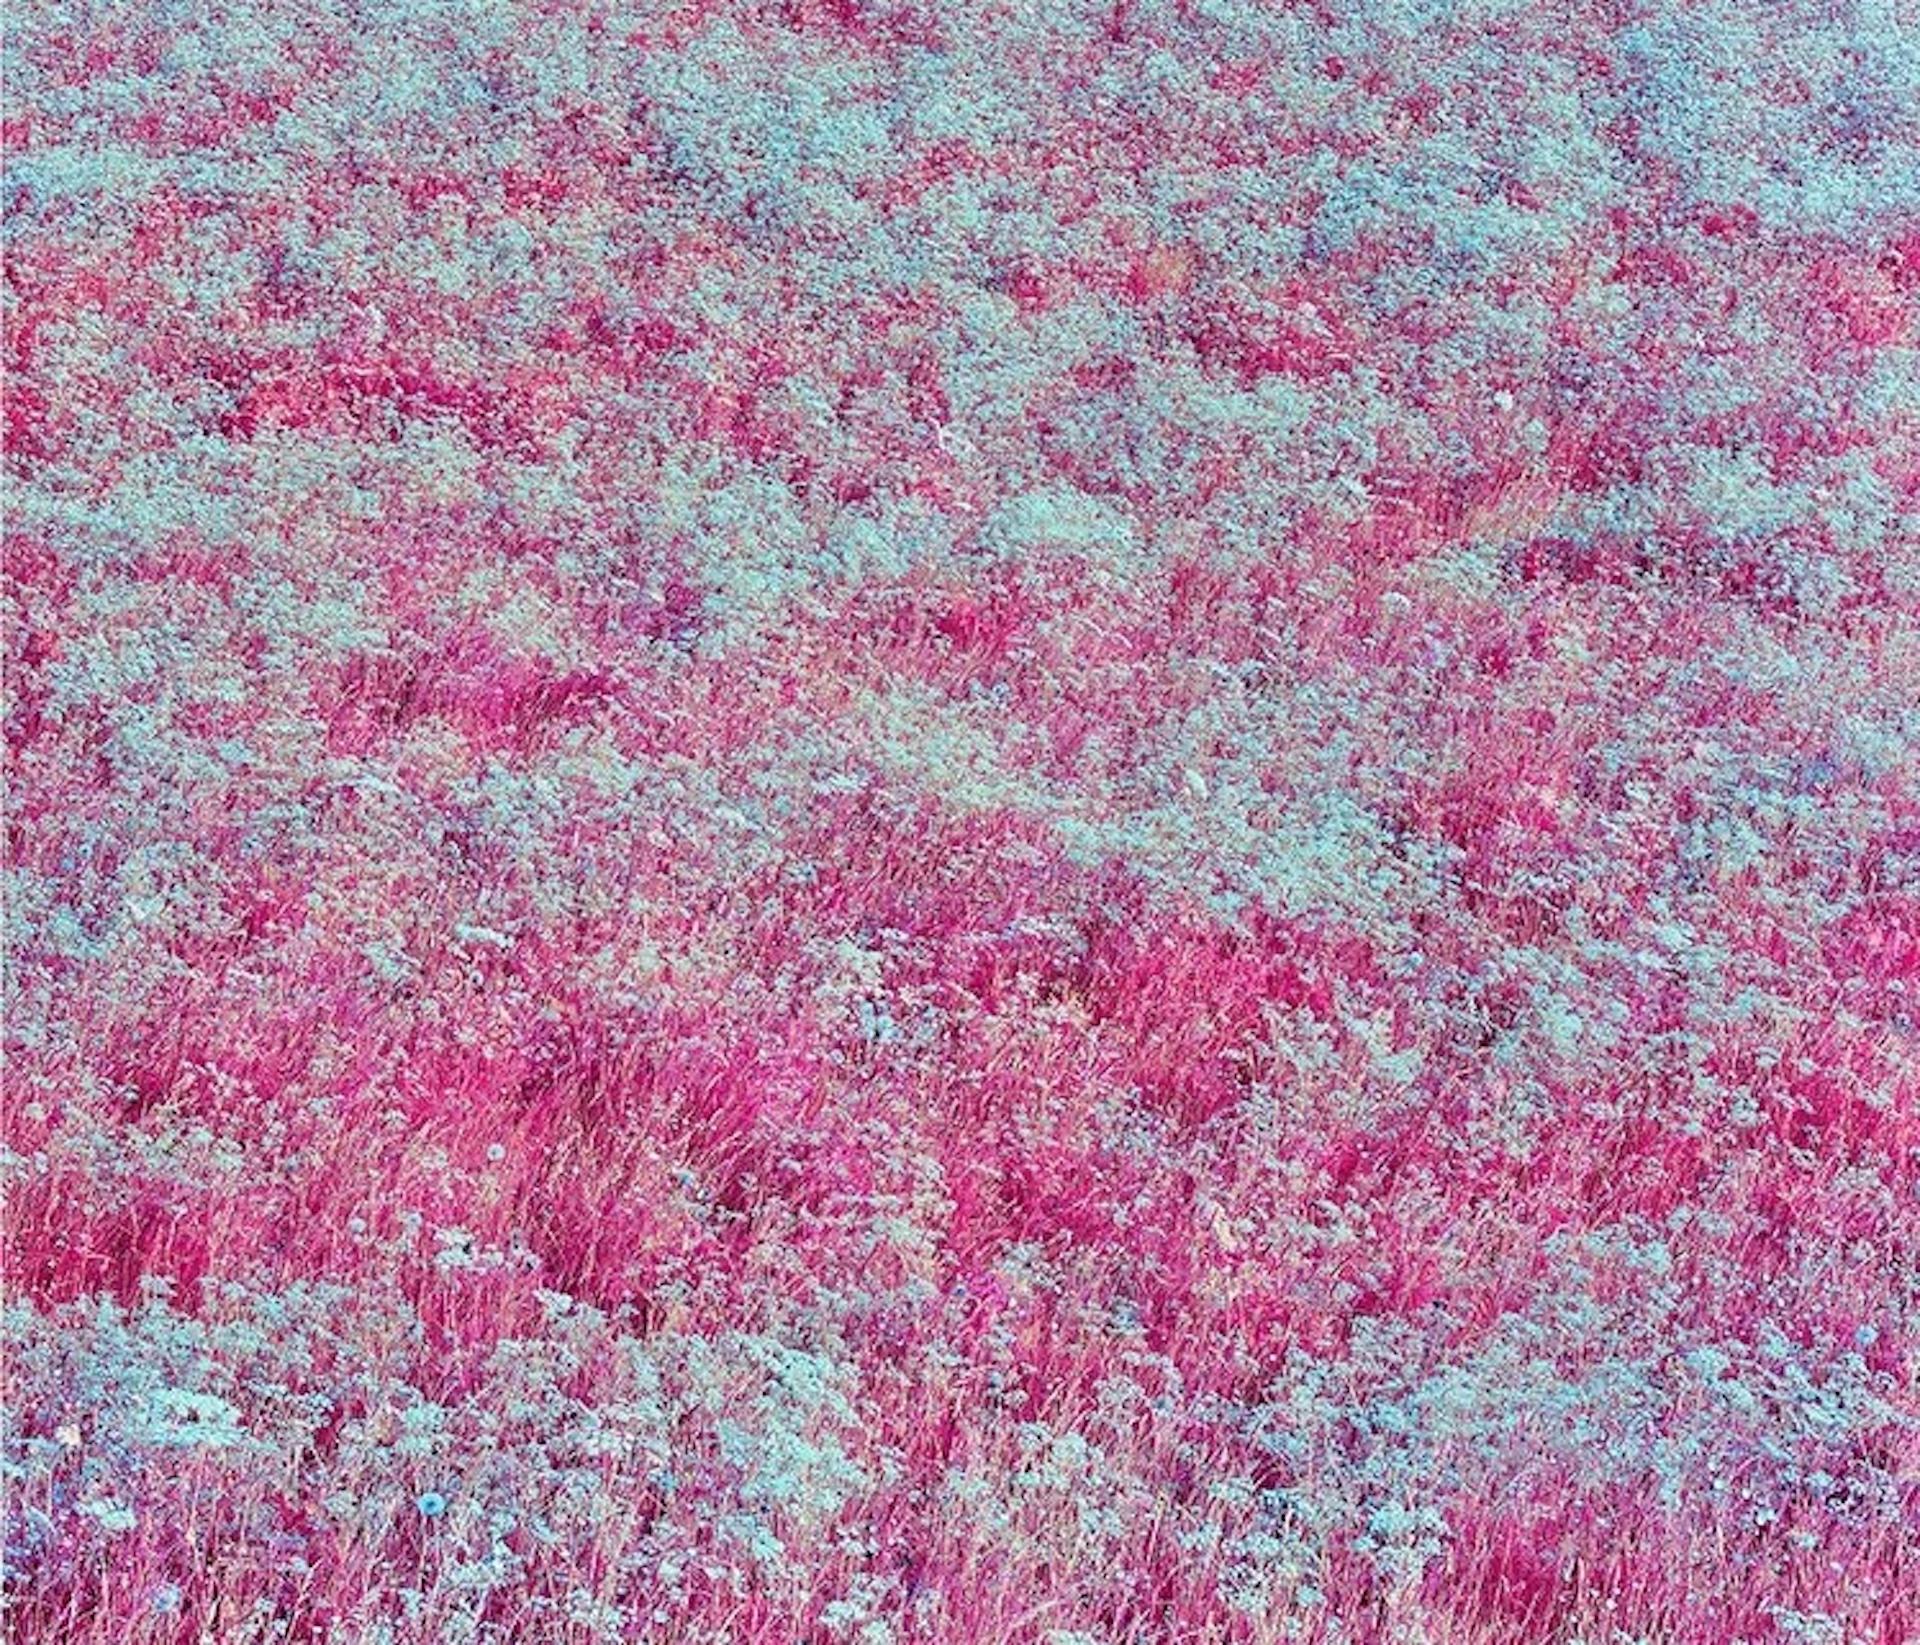 Zak van Biljon Landscape Photograph - Les Fleurs